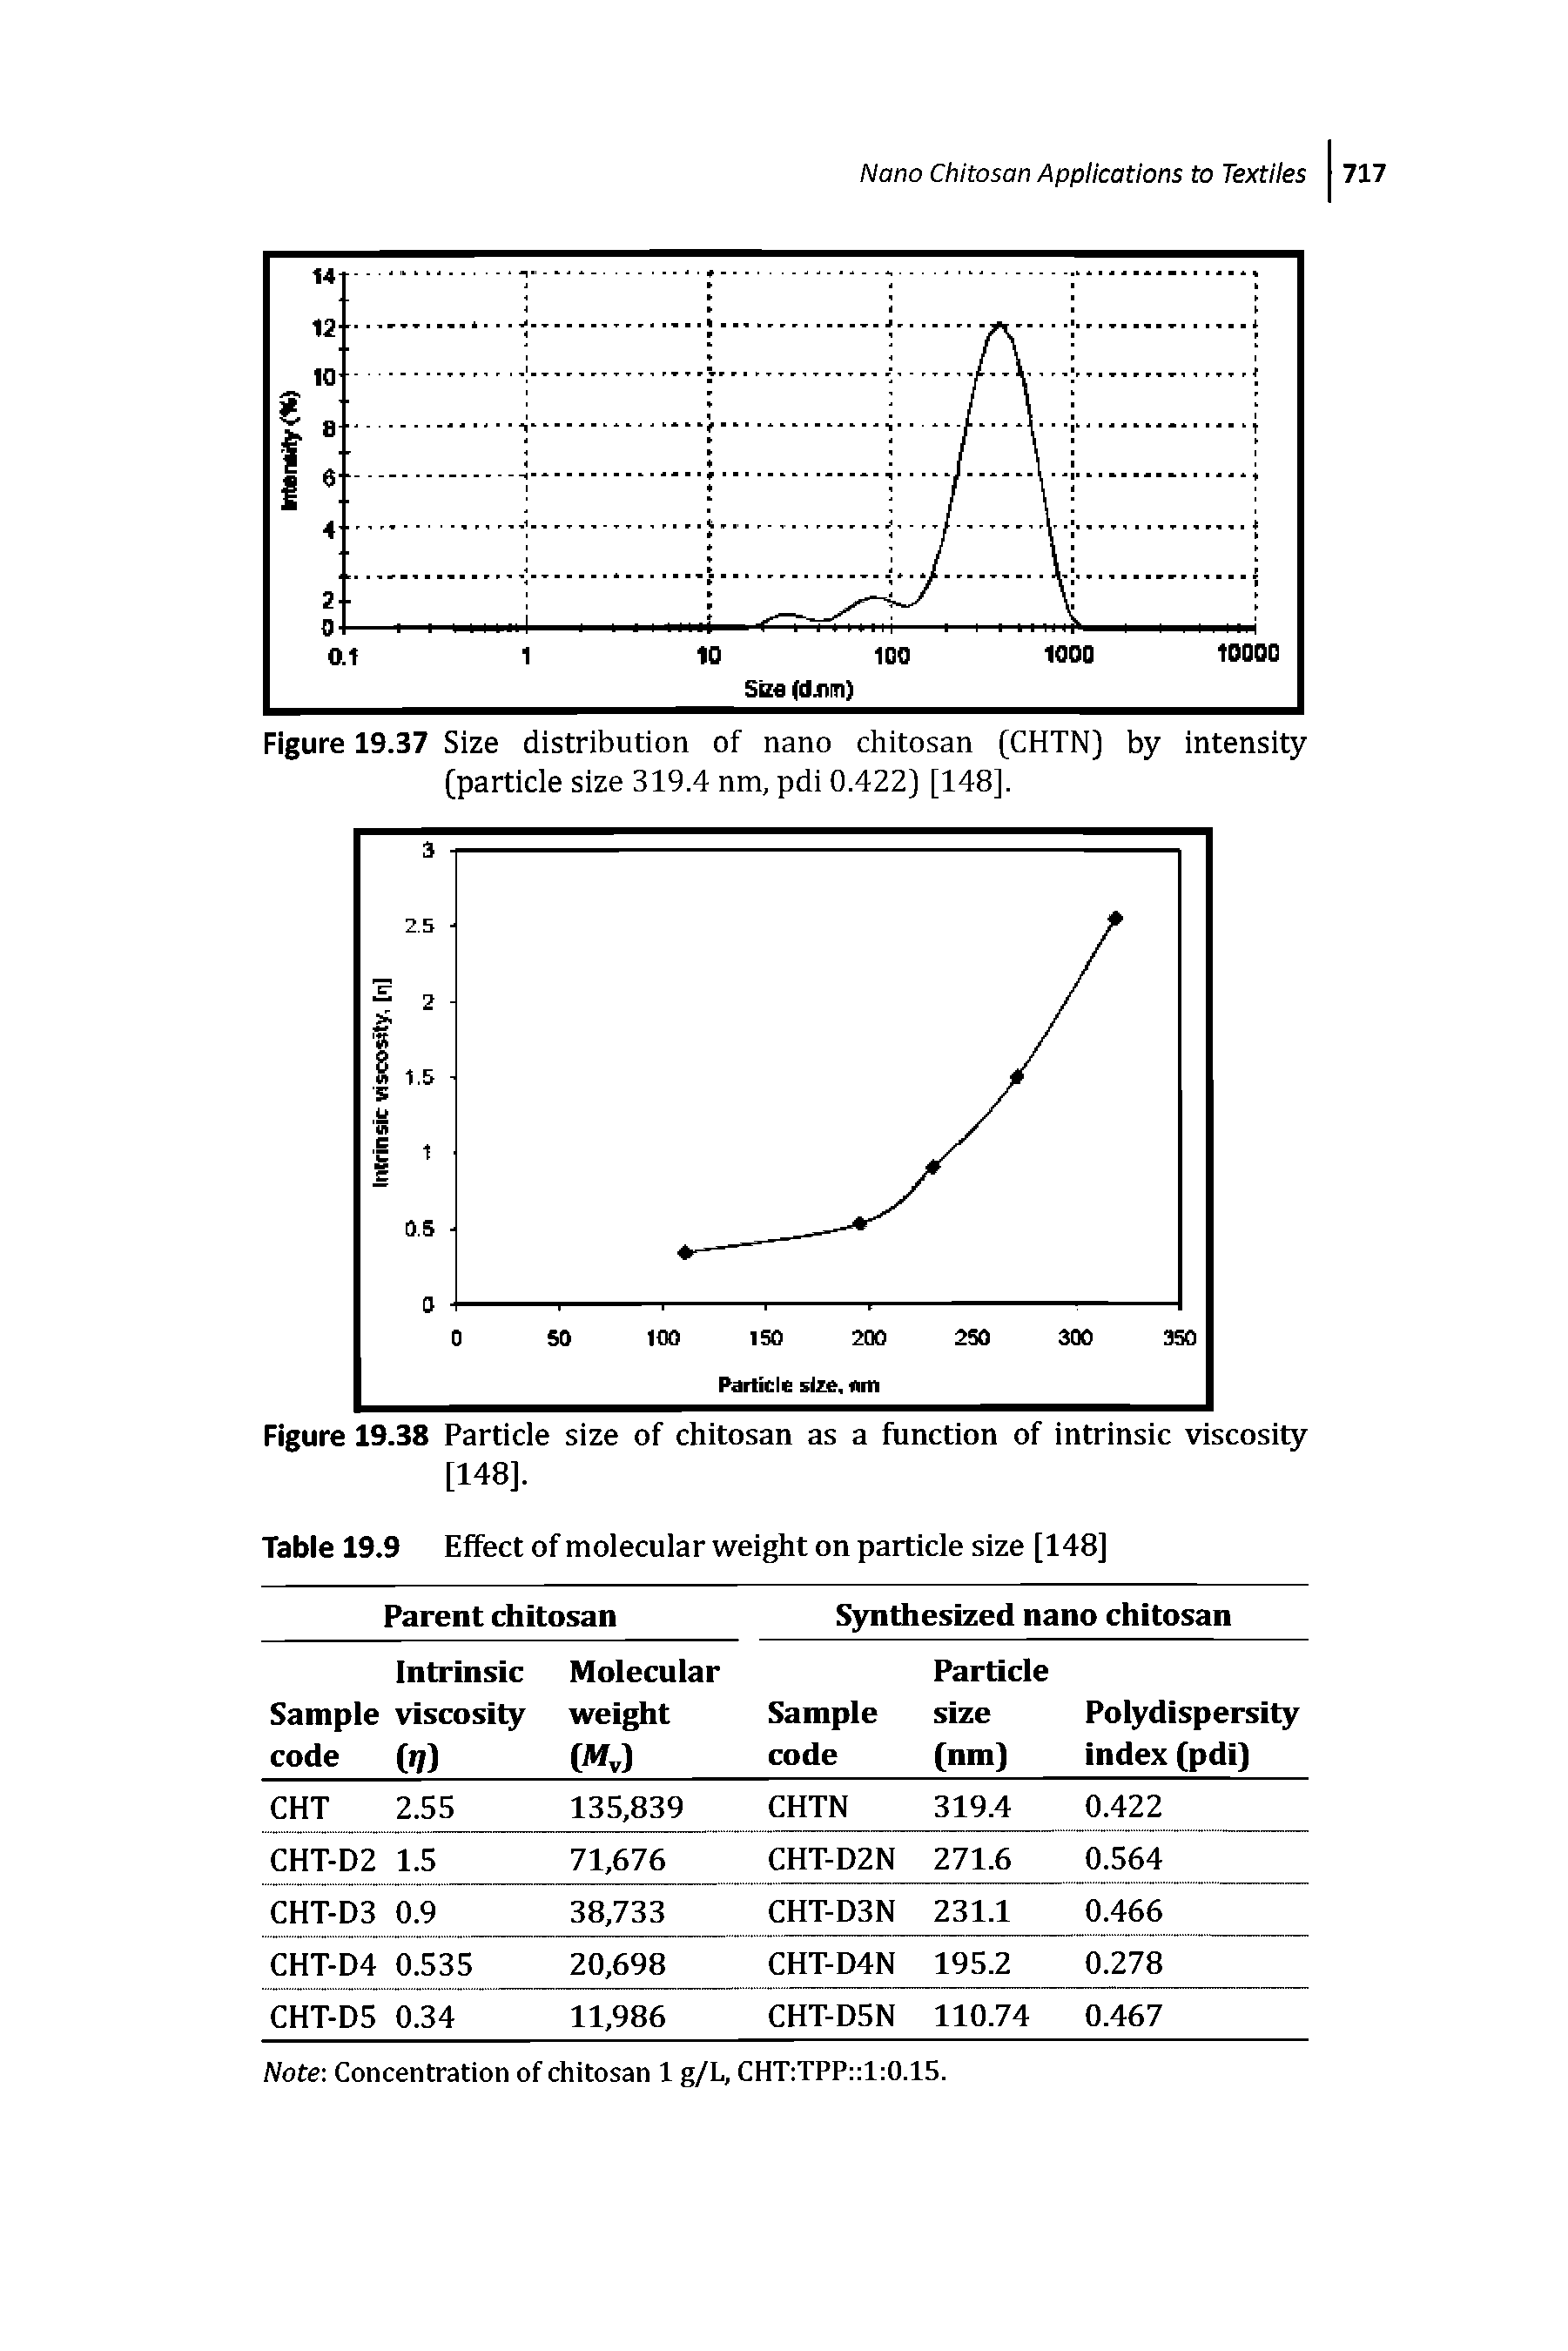 Figure 19.37 Size distribution of nano chitosan (CHTN) by intensity [particle size 319.4 nm, pdi 0.422) [148].